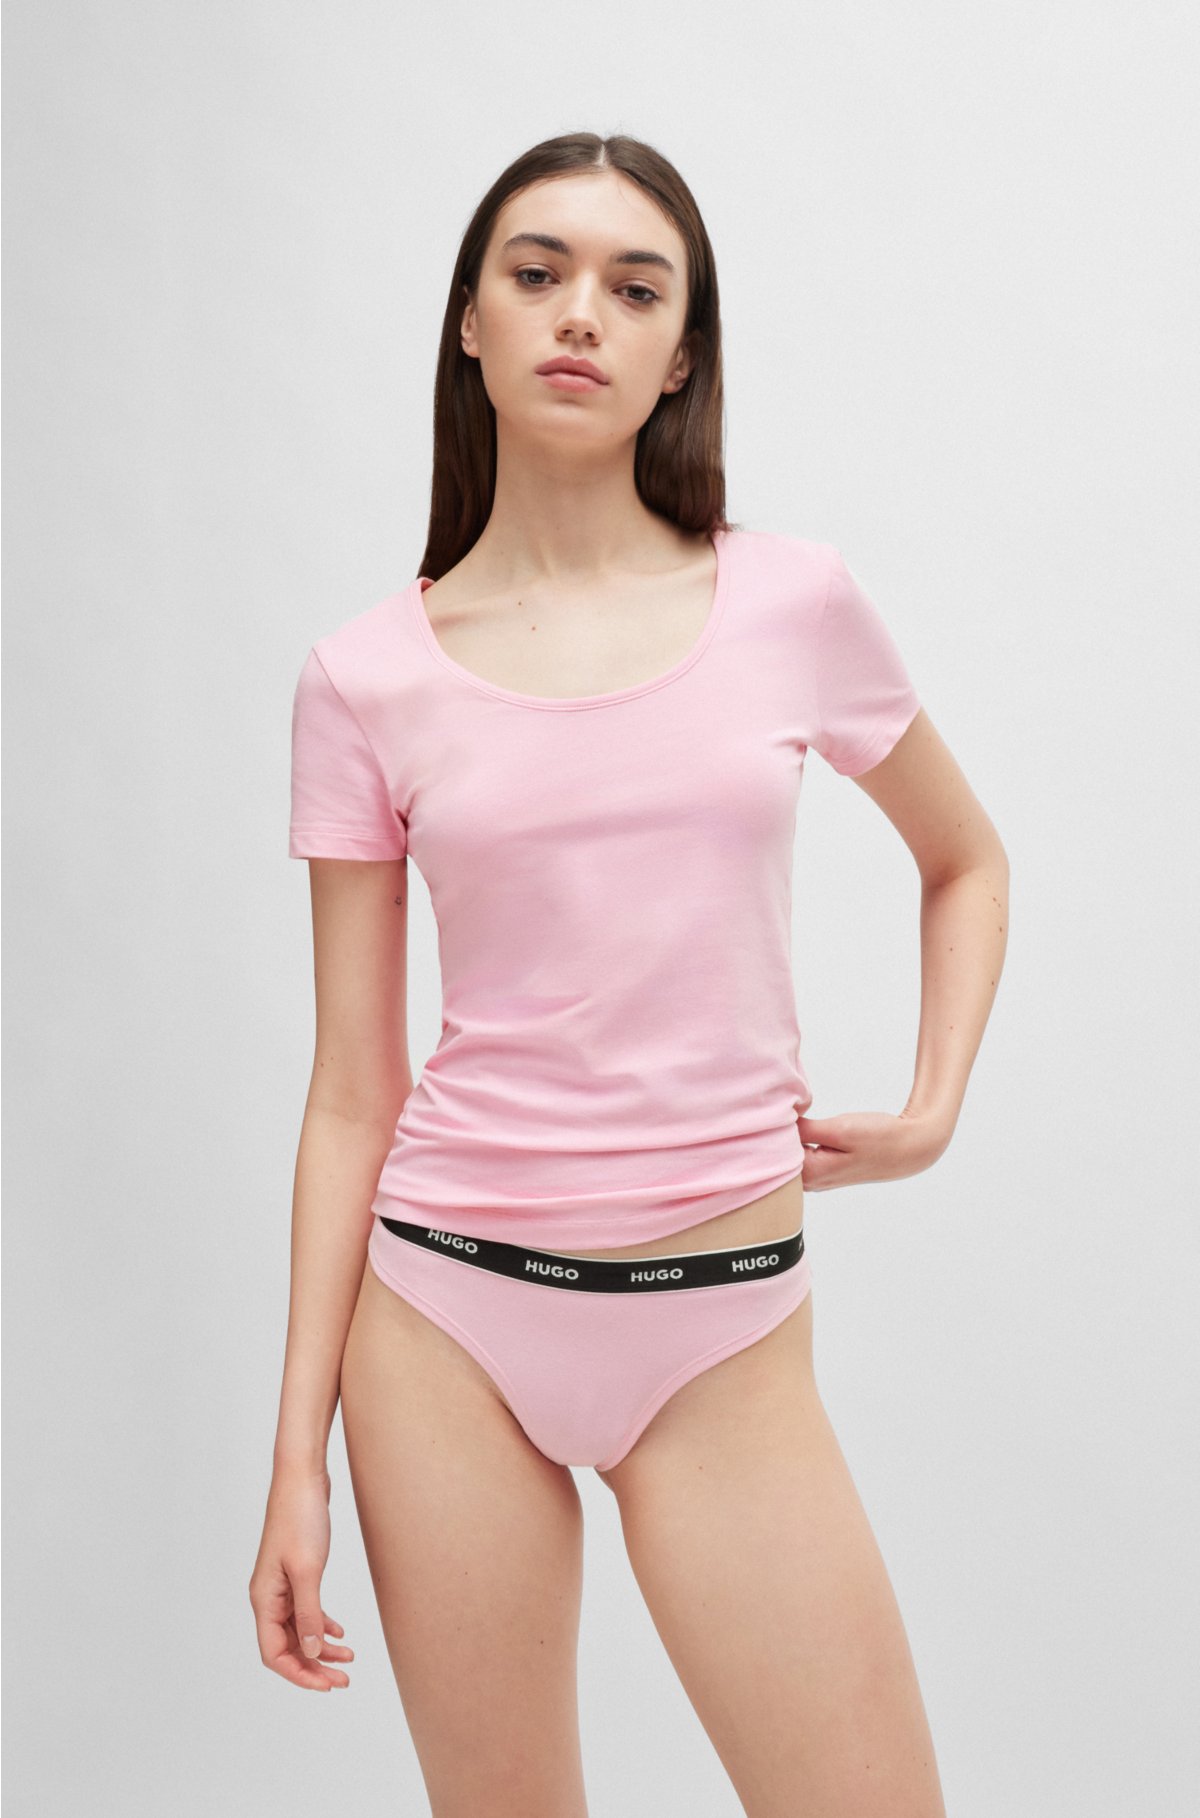 Stretch-cotton string briefs with logo waistband, light pink